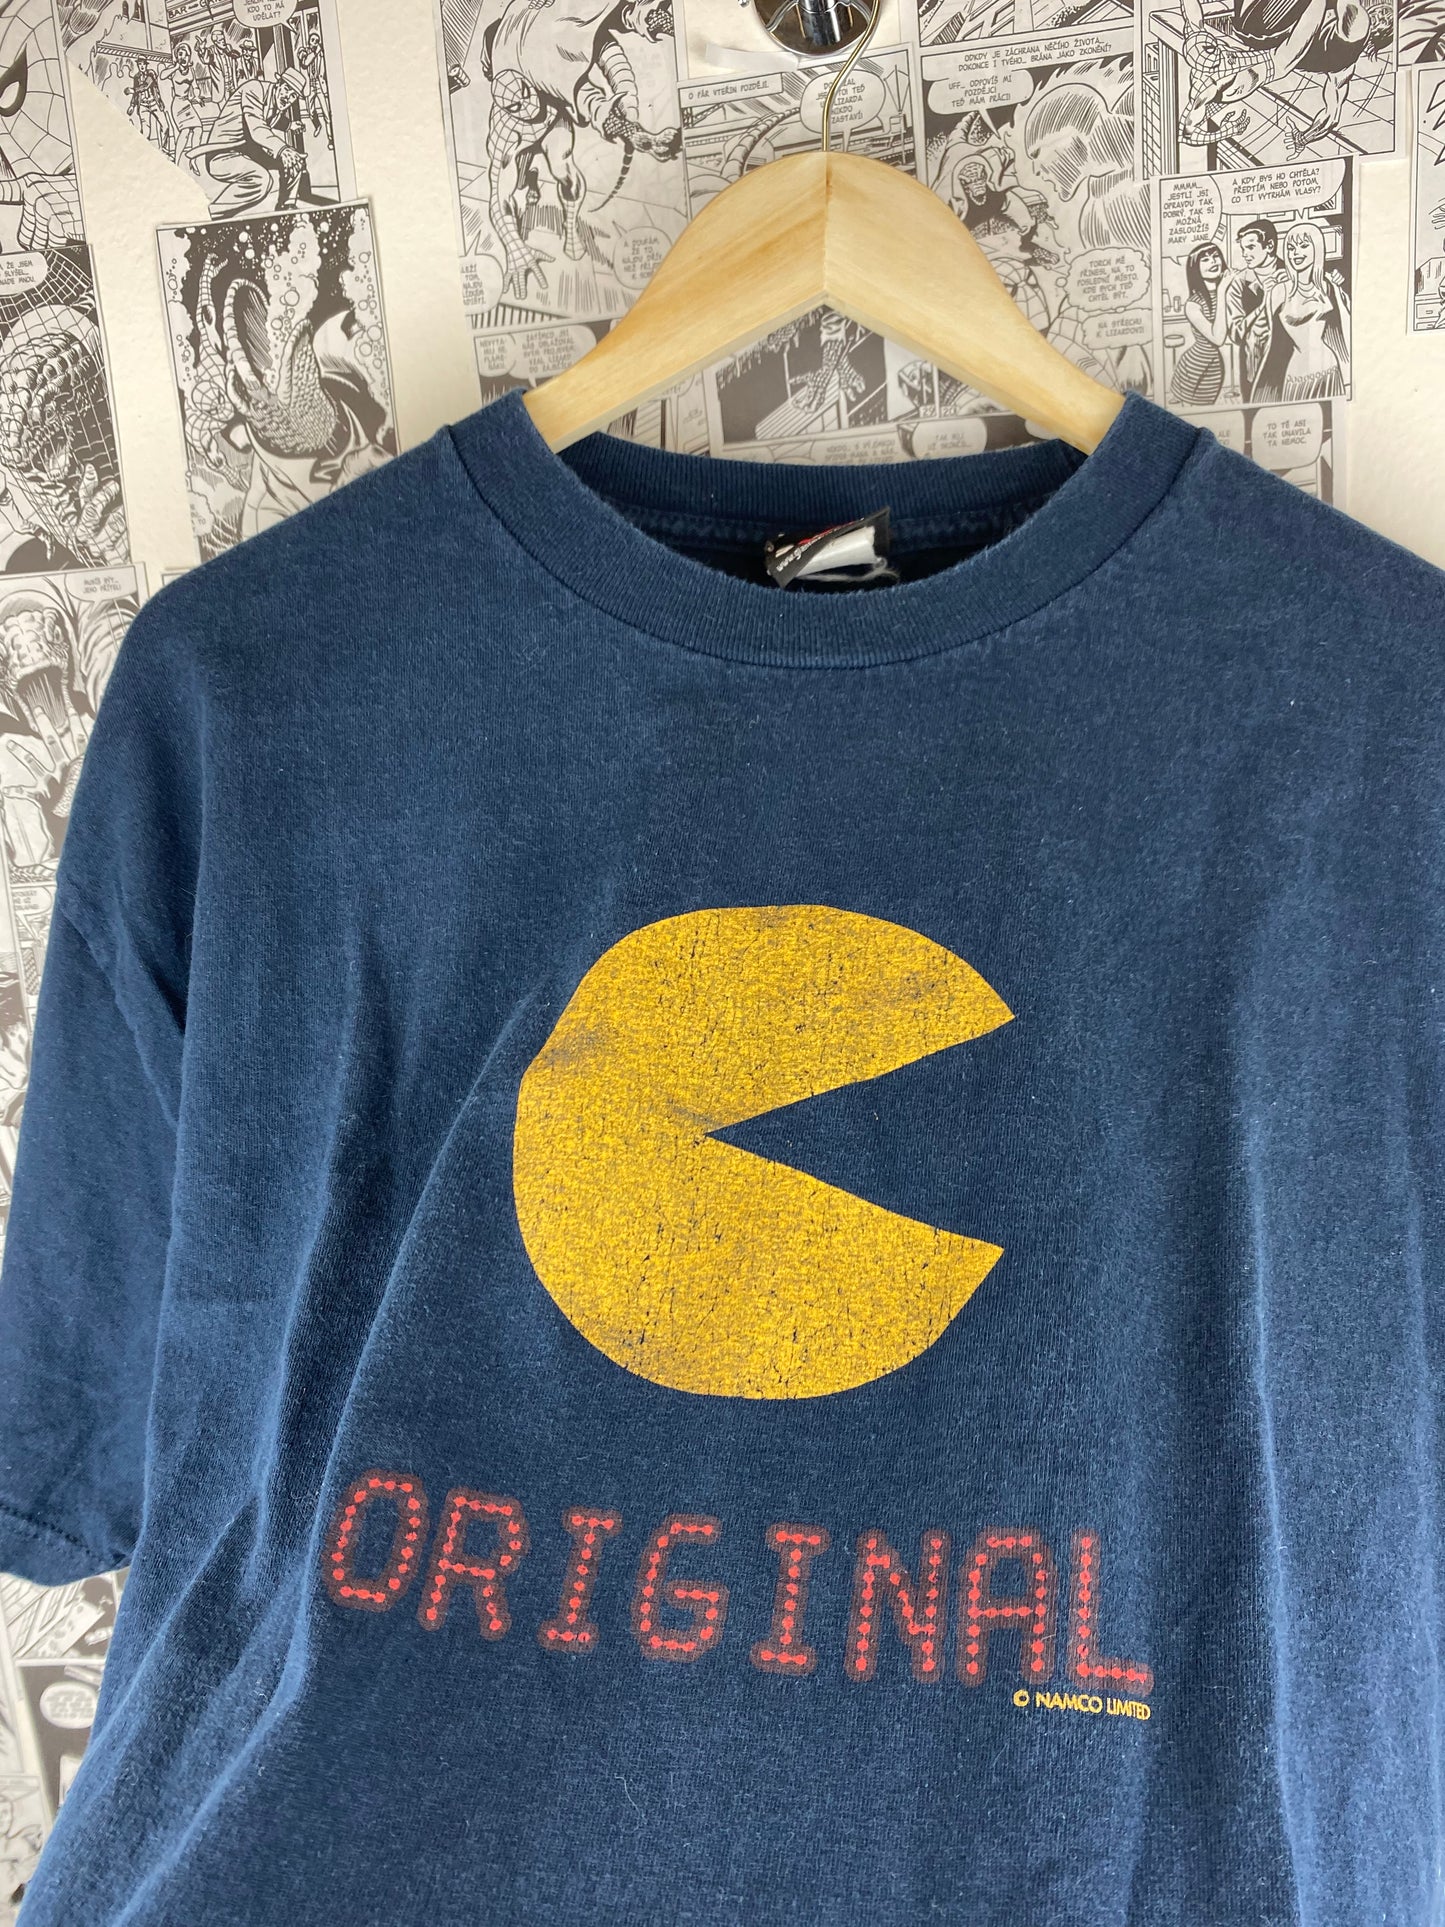 Vintage Pac-Man 90s t-shirt - size XL